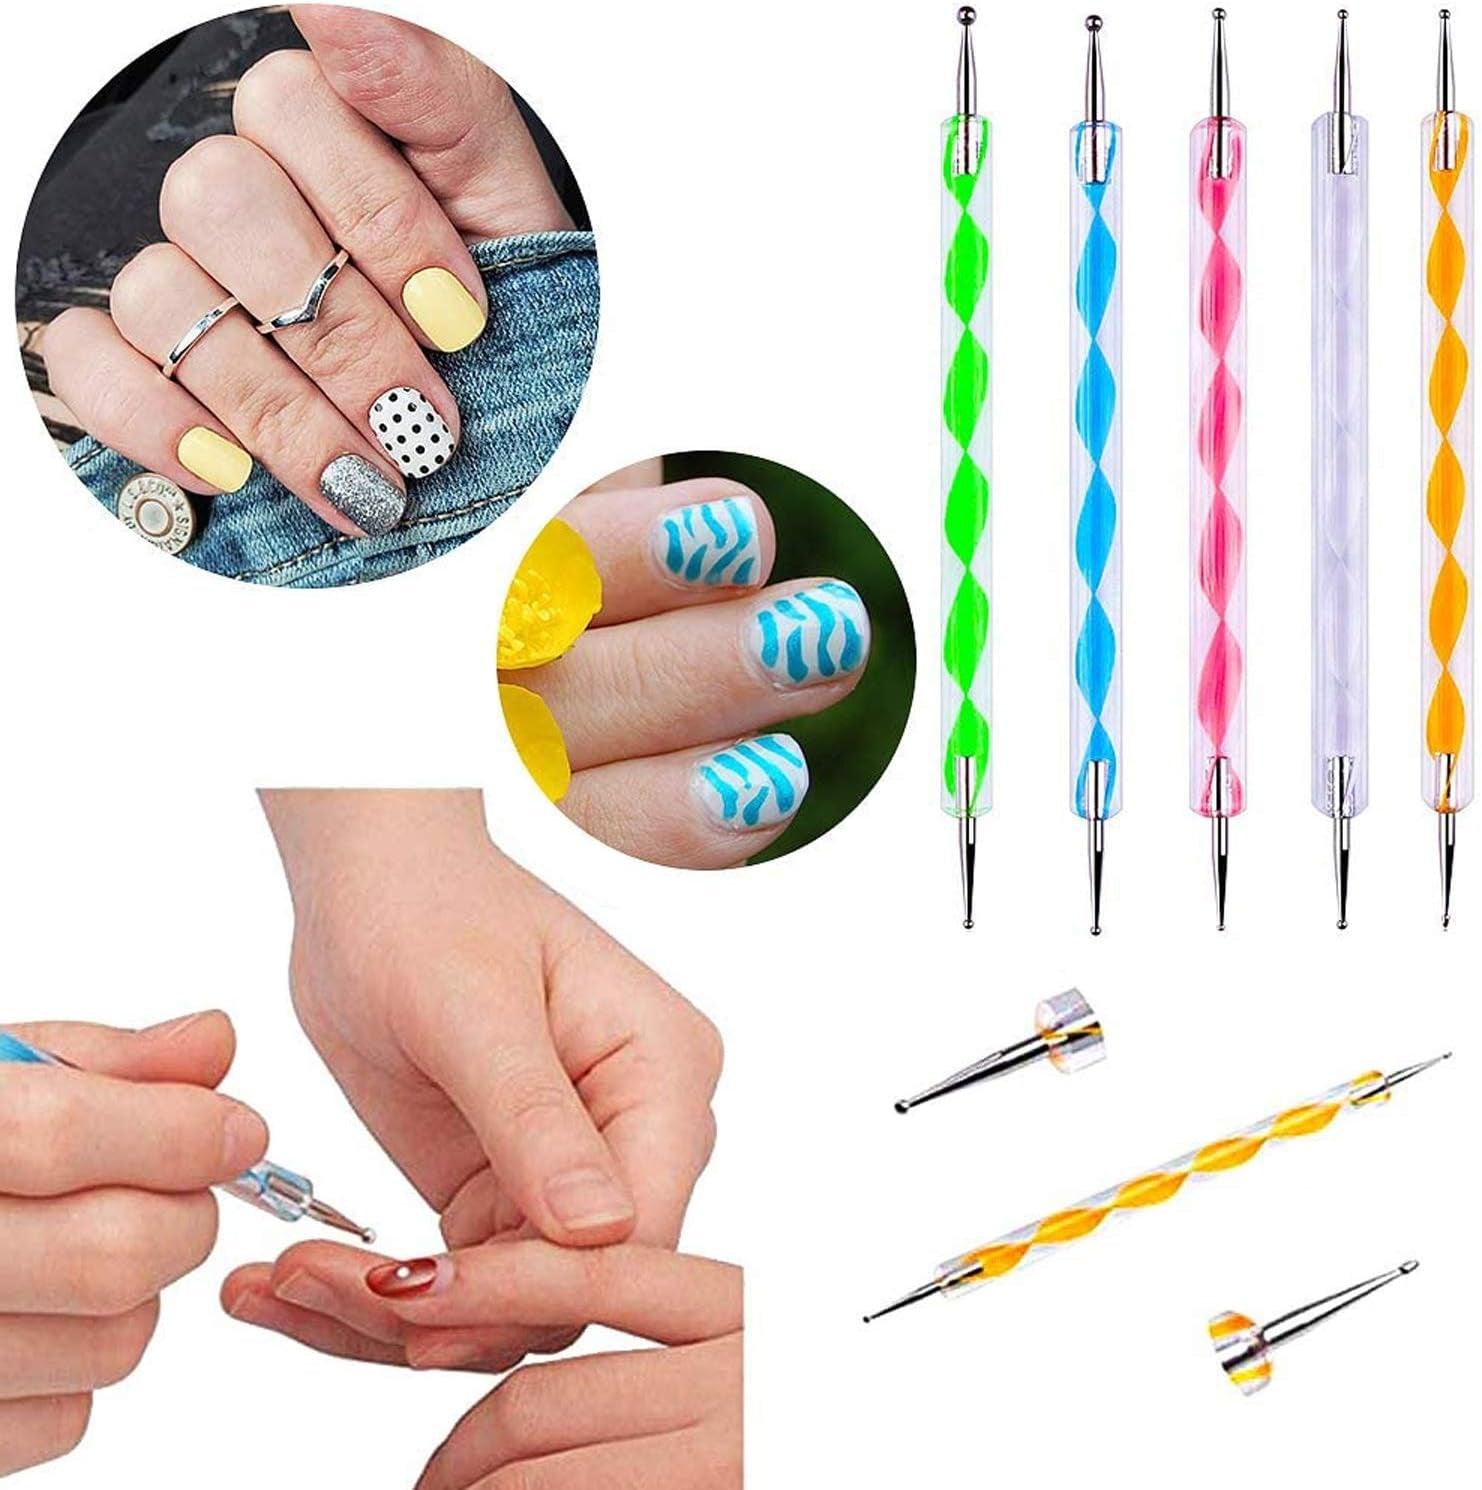 31 Pieces Mandala Dotting Tools Set Professional Supplies Tools Kits, Include Mini Easel, Paint Tray - WoodArtSupply